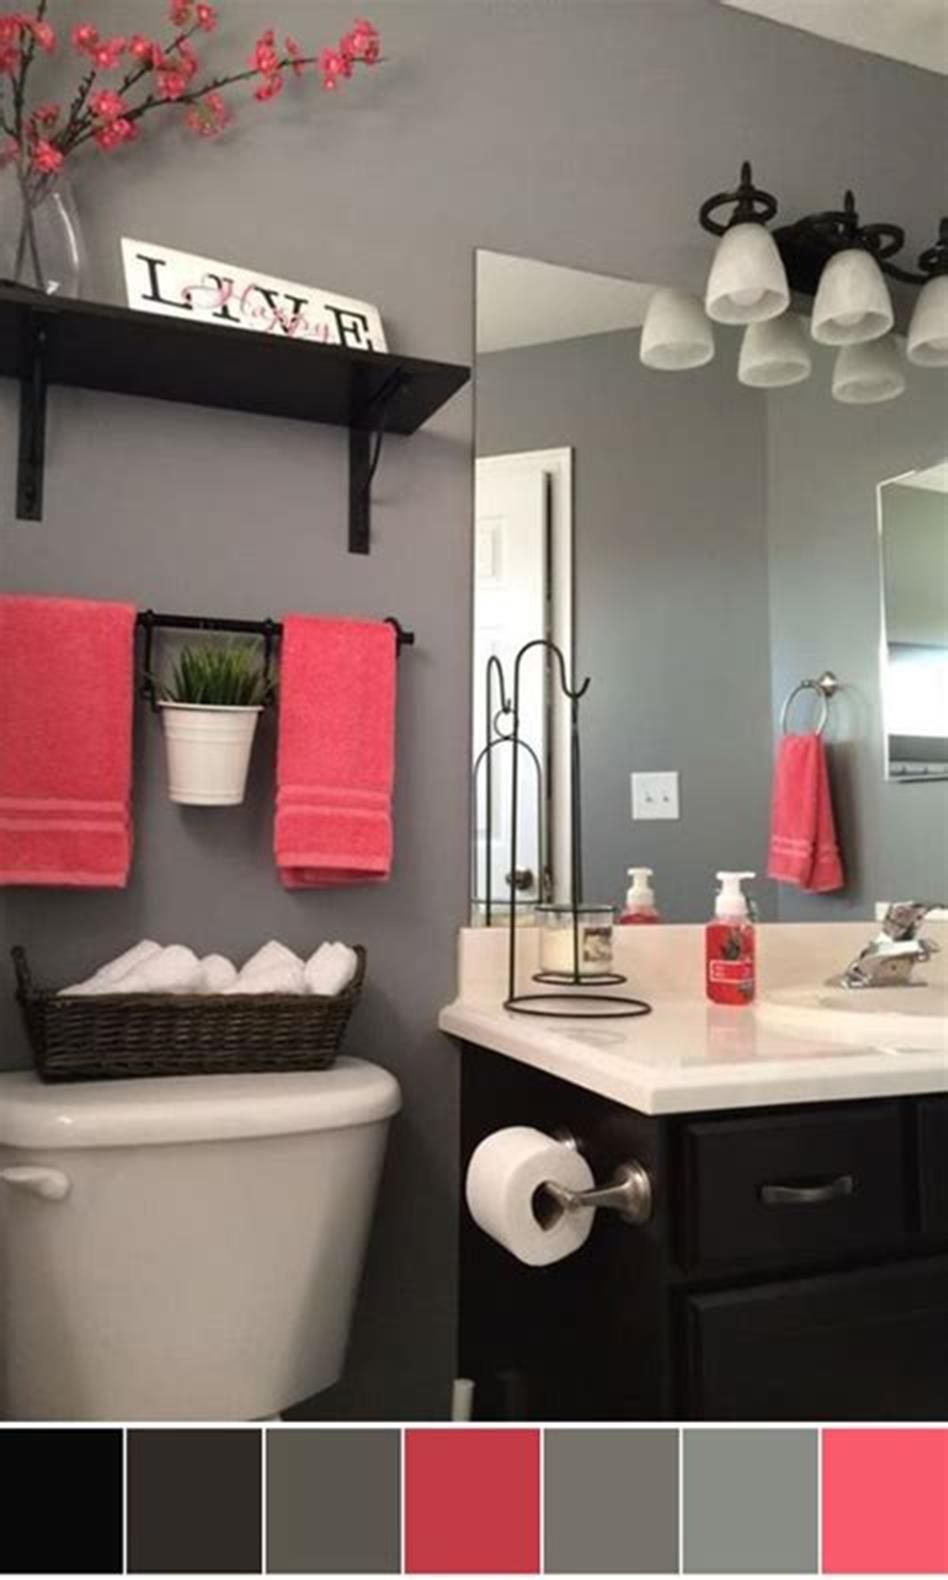 40 Best Color Schemes Bathroom Decorating Ideas on a Budget 2019 31 - ViraLinspirationS